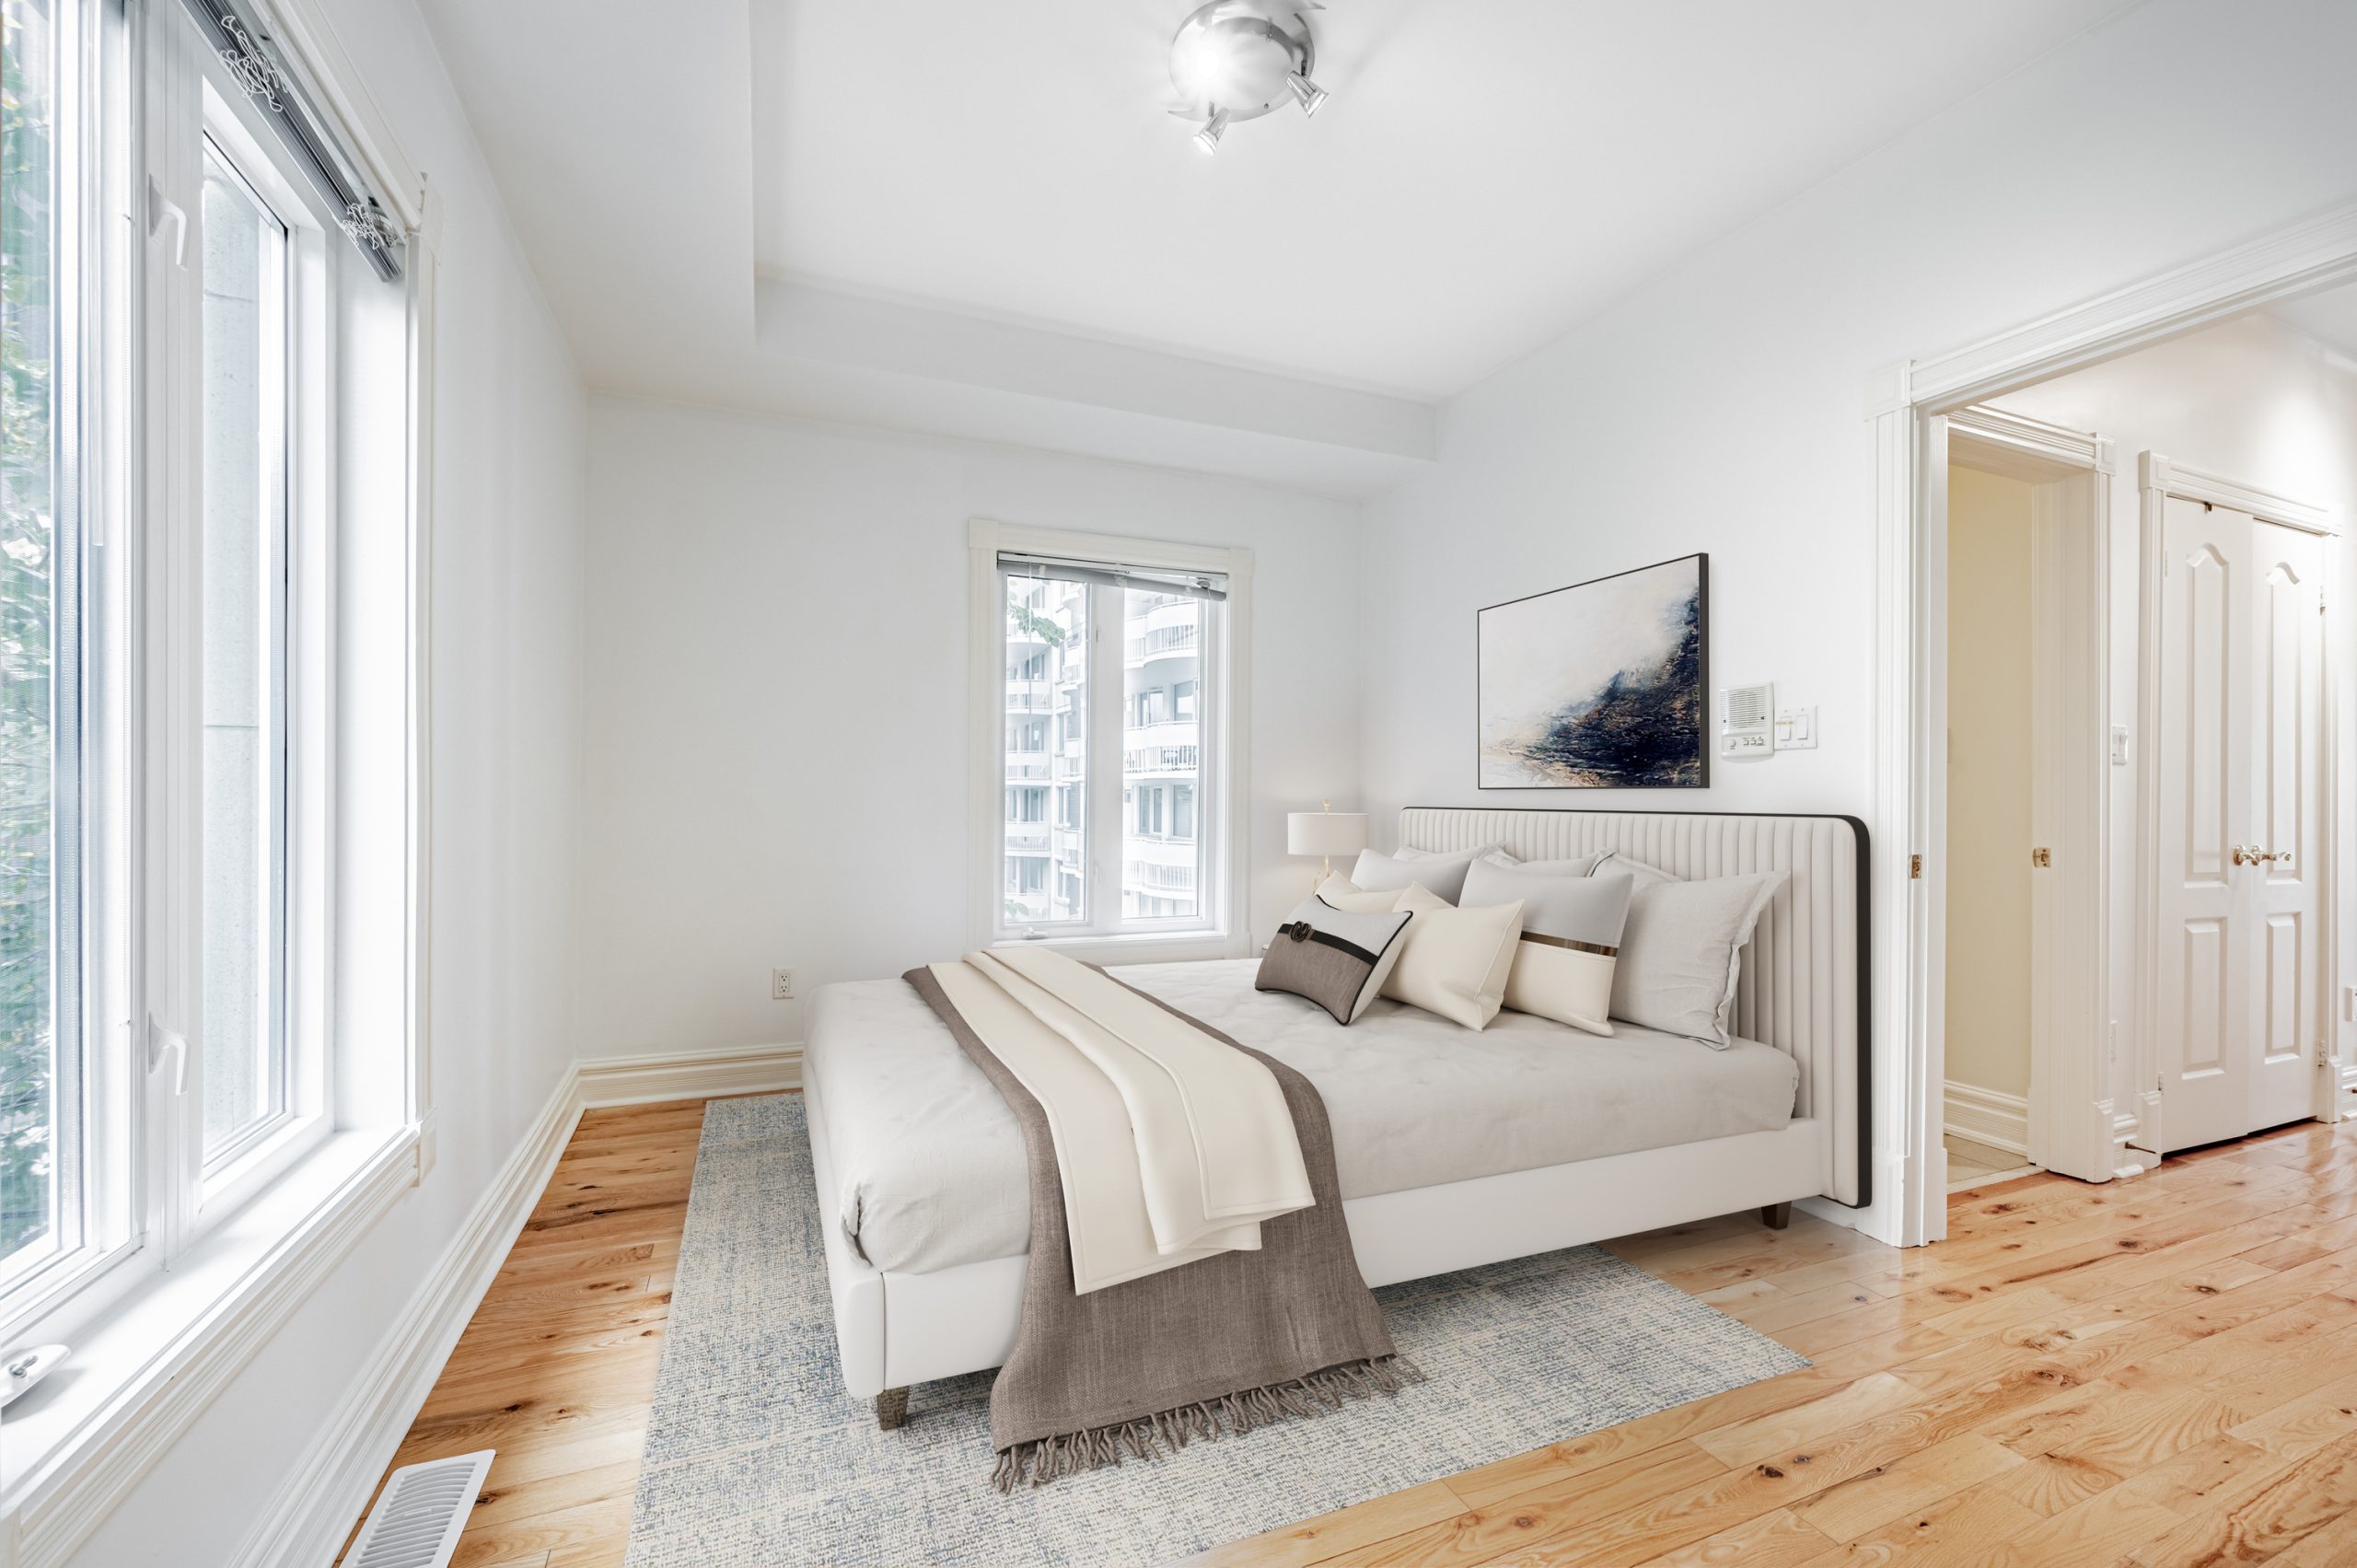 Smaller second floor bedroom with hardwood floors and modern lighting – 23 Annex Lane.